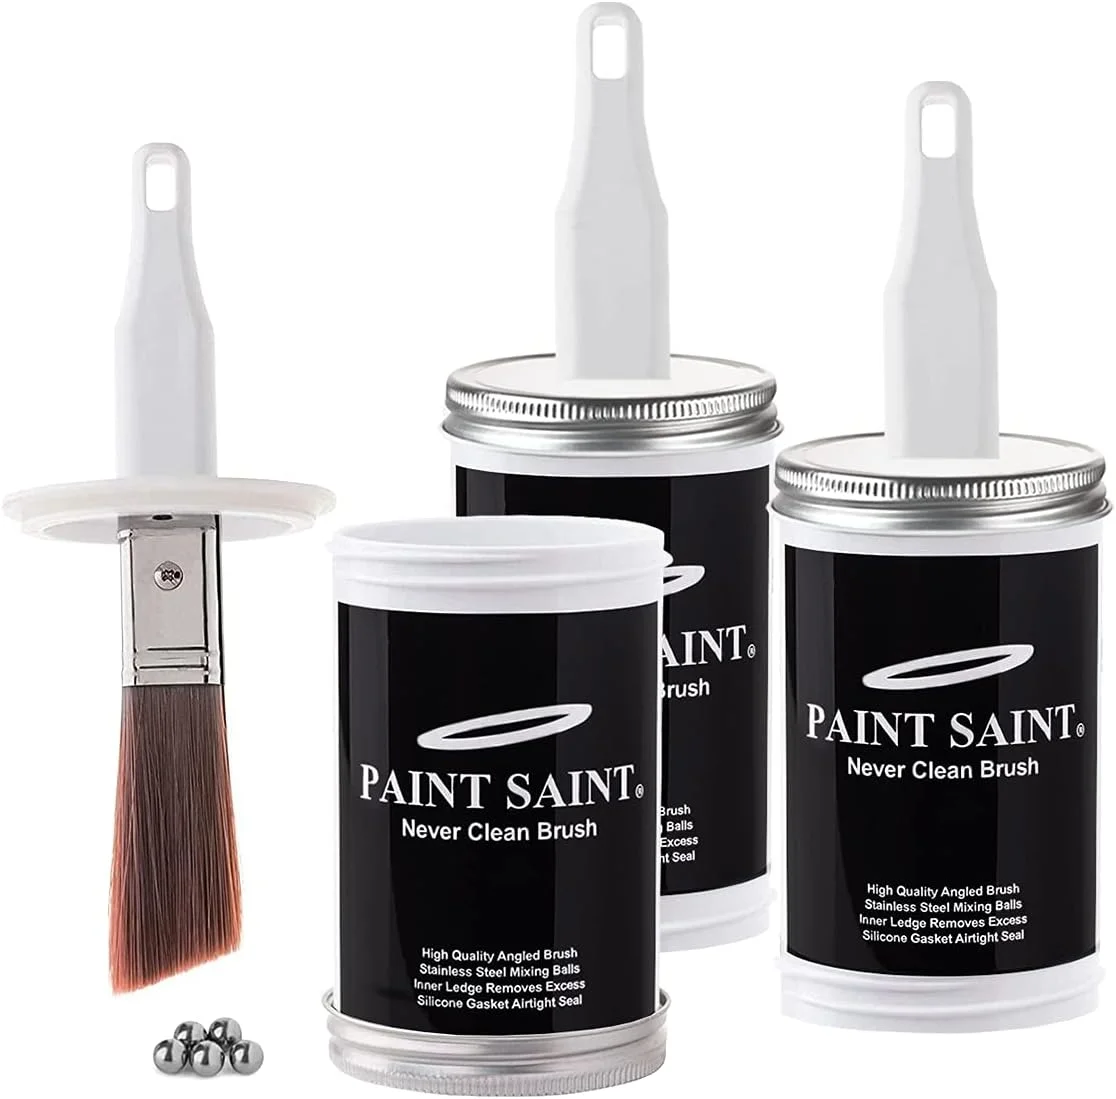 Paint Saint No Mess Touch Up Paint Storage Container,Quick Touch-Ups,Trim Painting,Organizing Paint Colors,Storing Leftover Paint